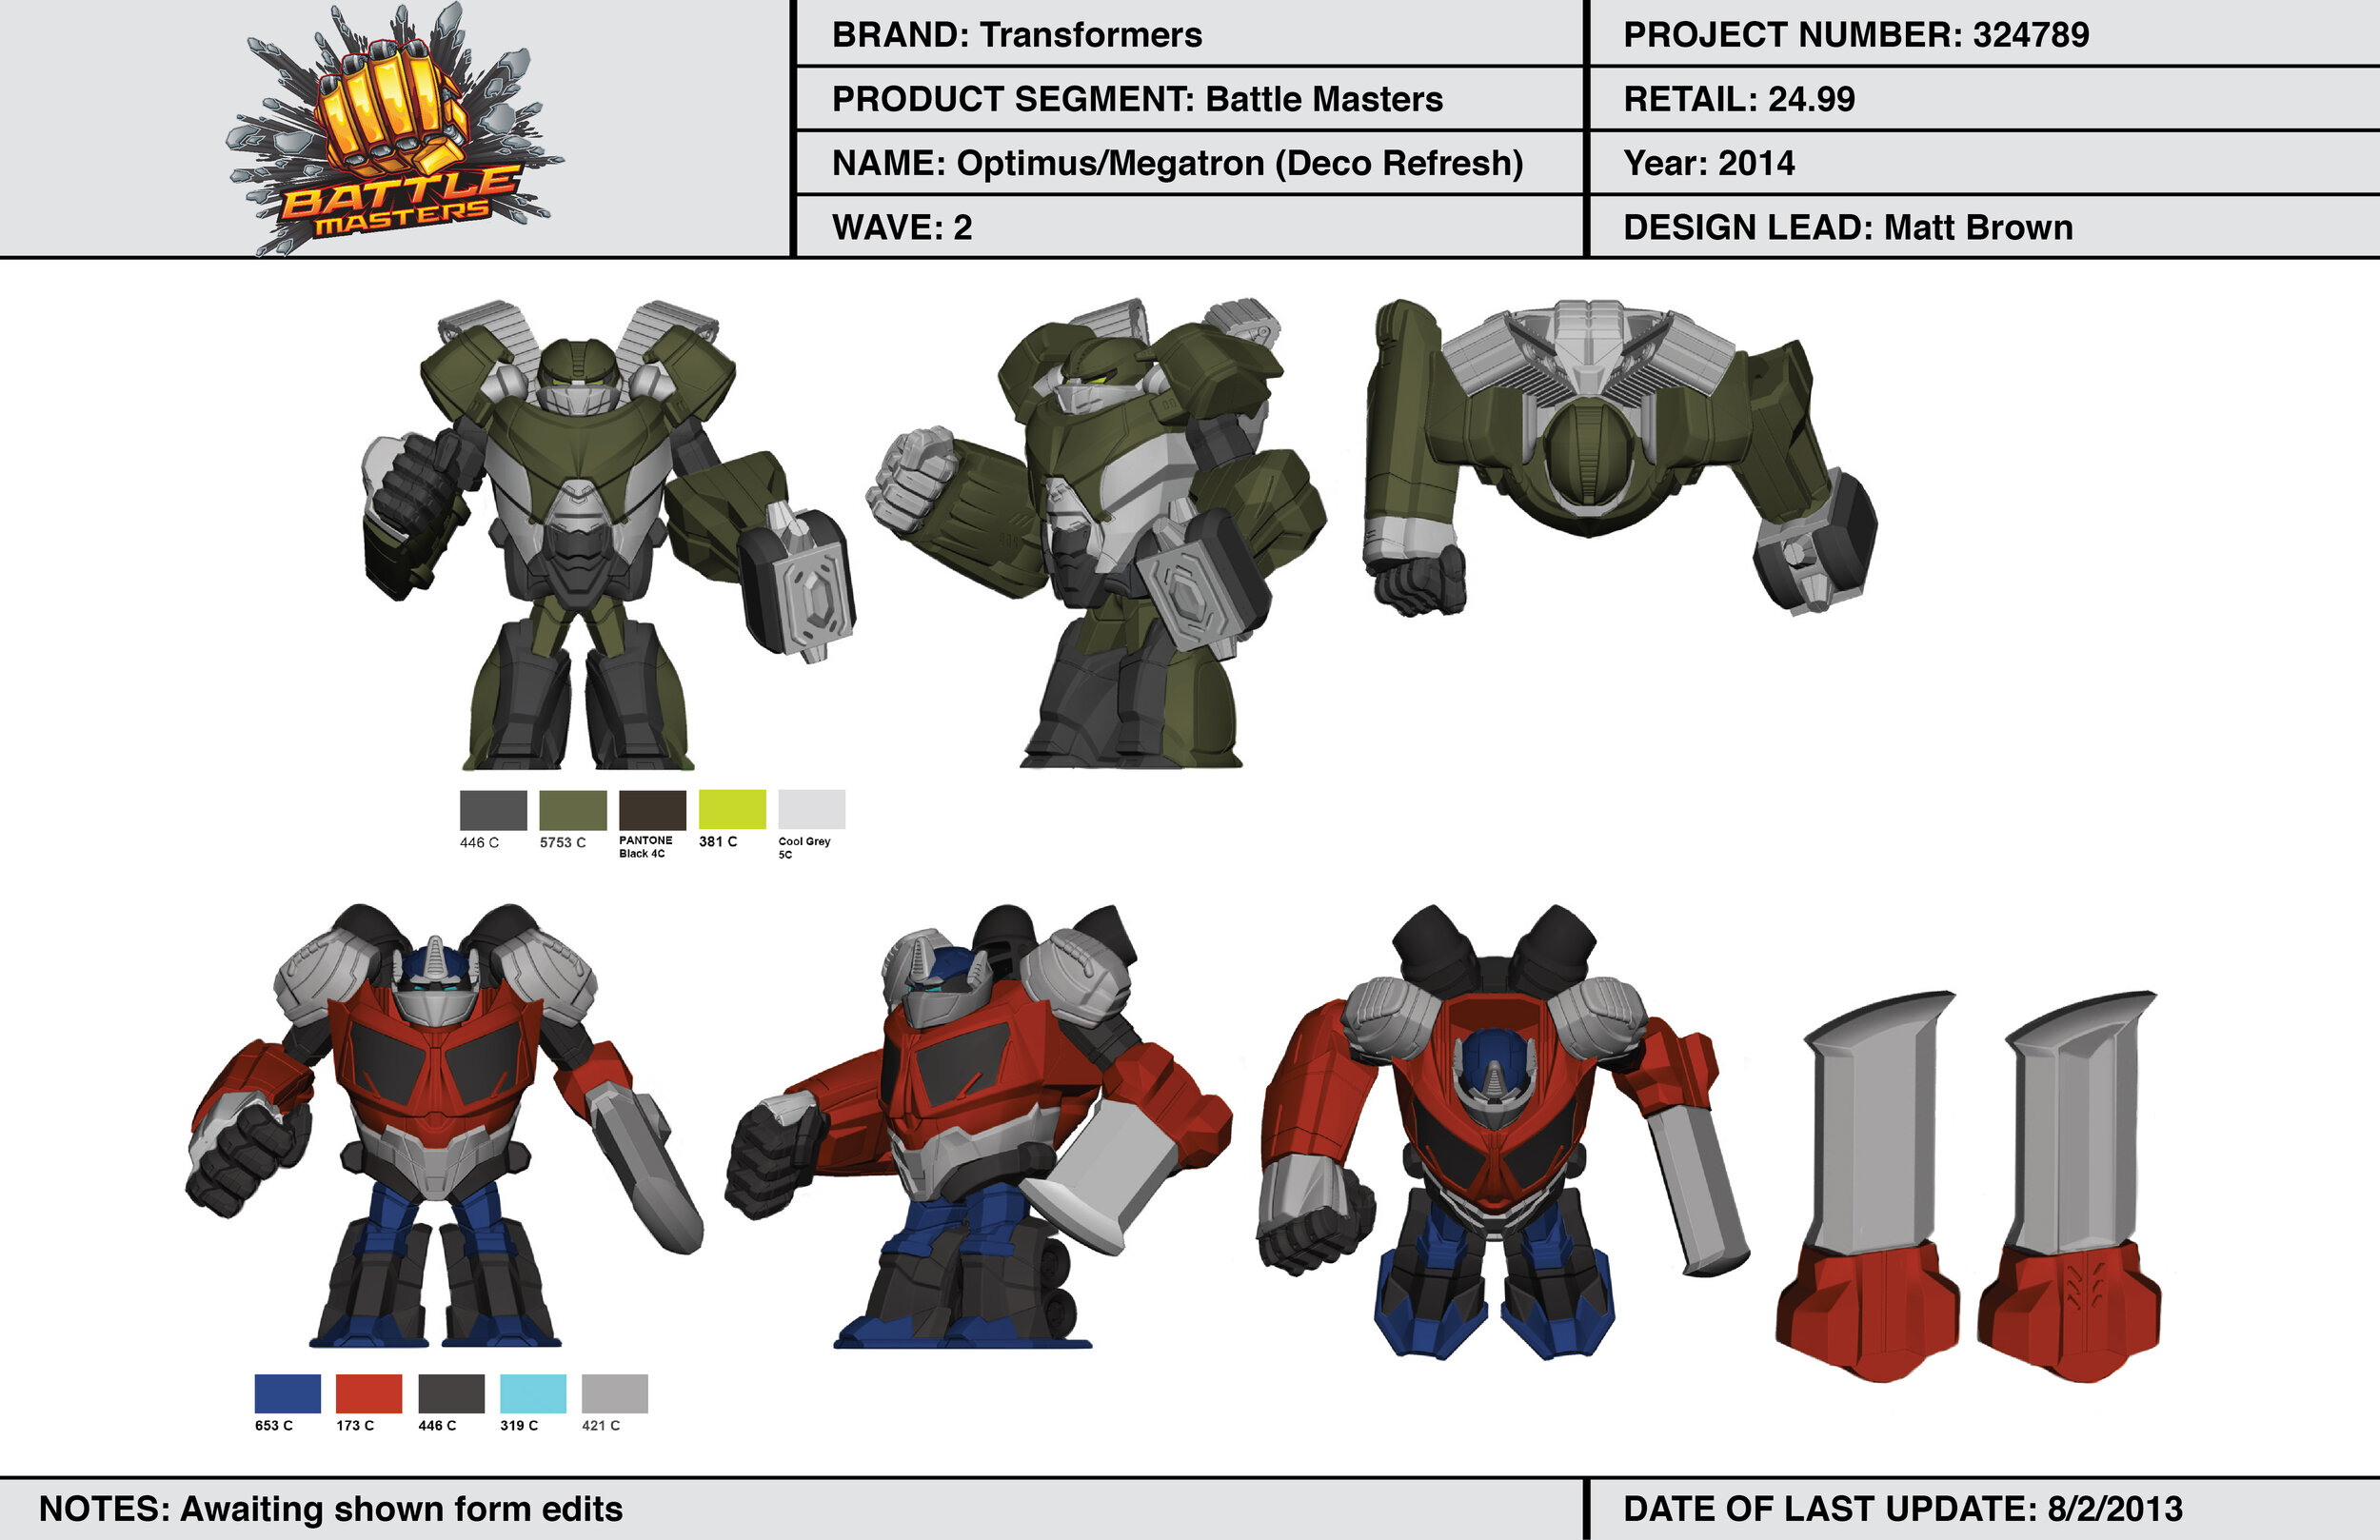 Transformers Game Development Dreadnought Studios — Dreadnought Studios